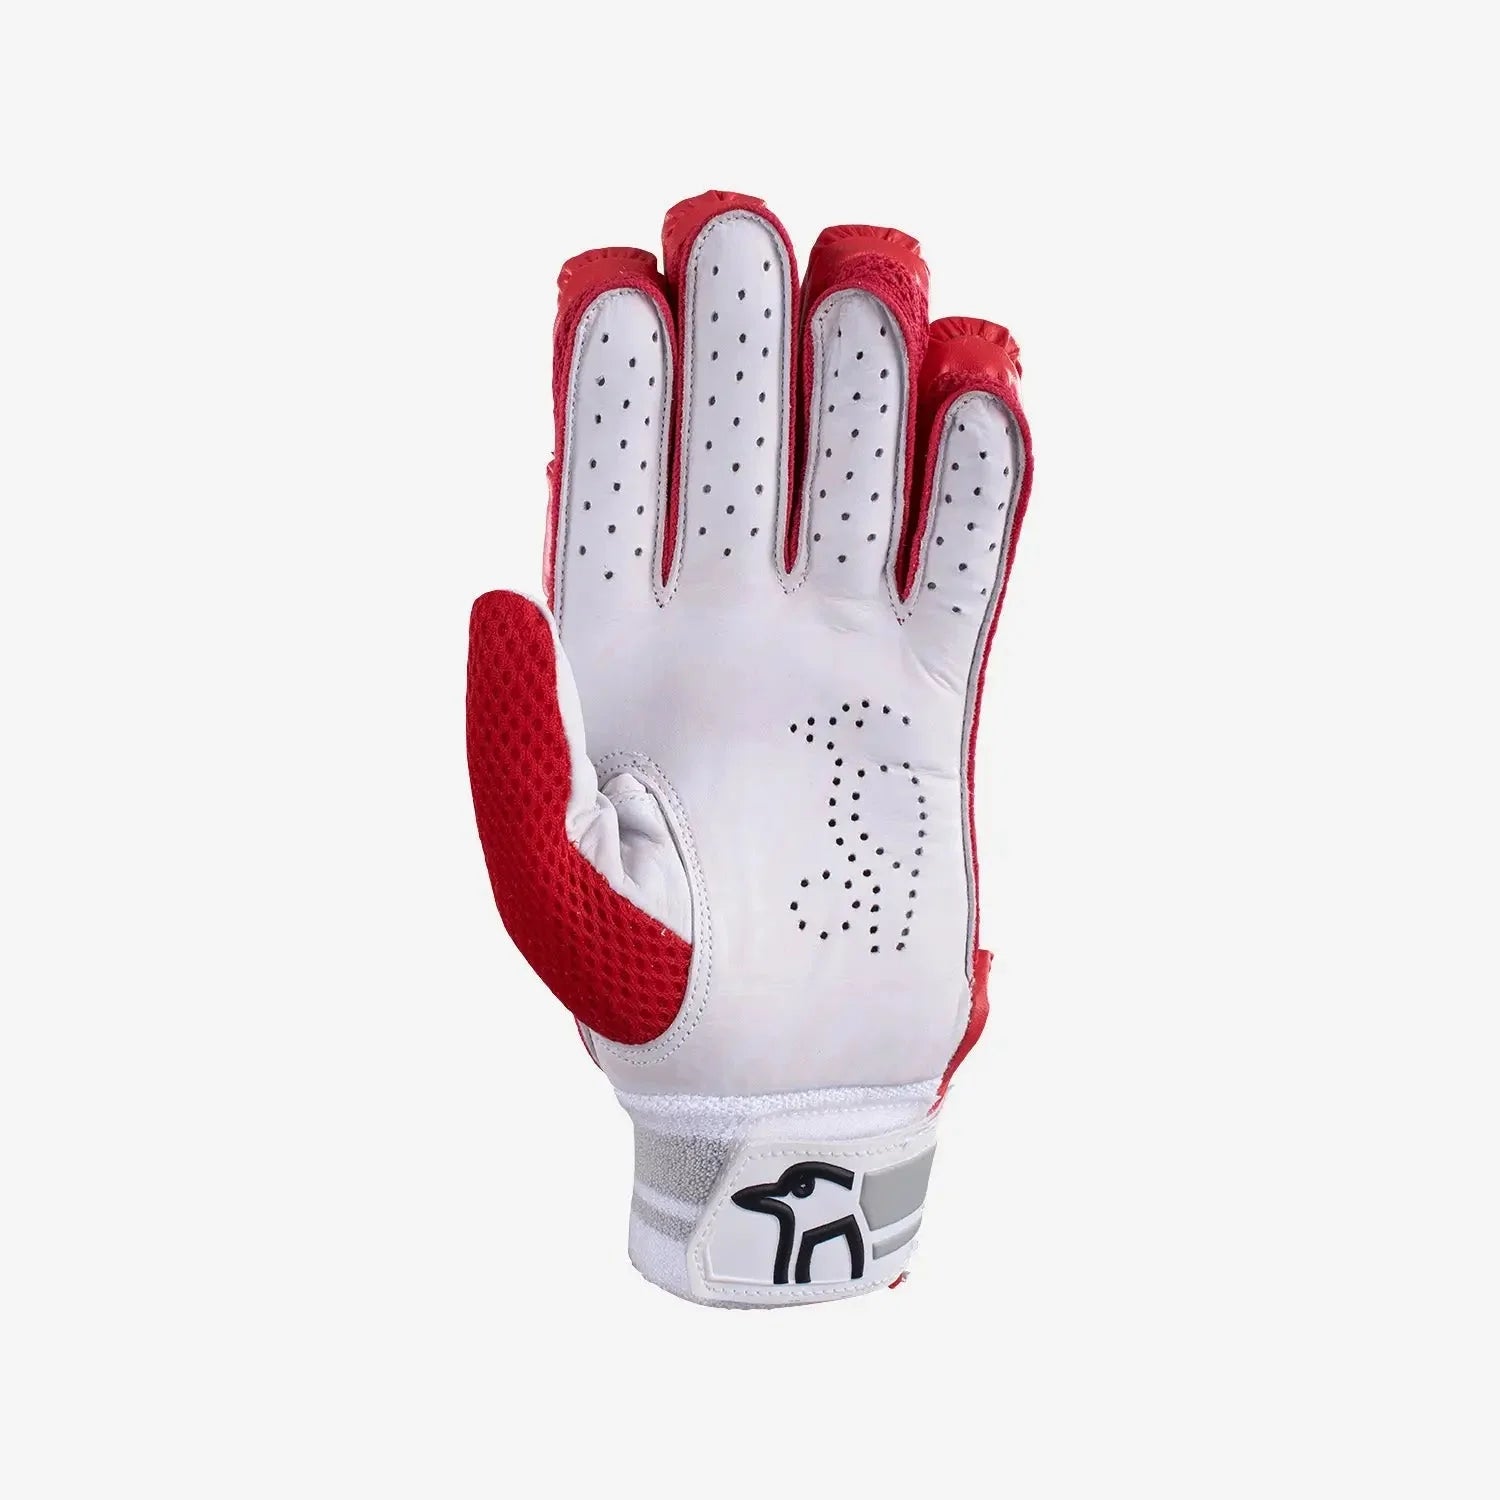 Kookaburra 4.1 T20 Red Cricket Batting Gloves - GLOVE - BATTING